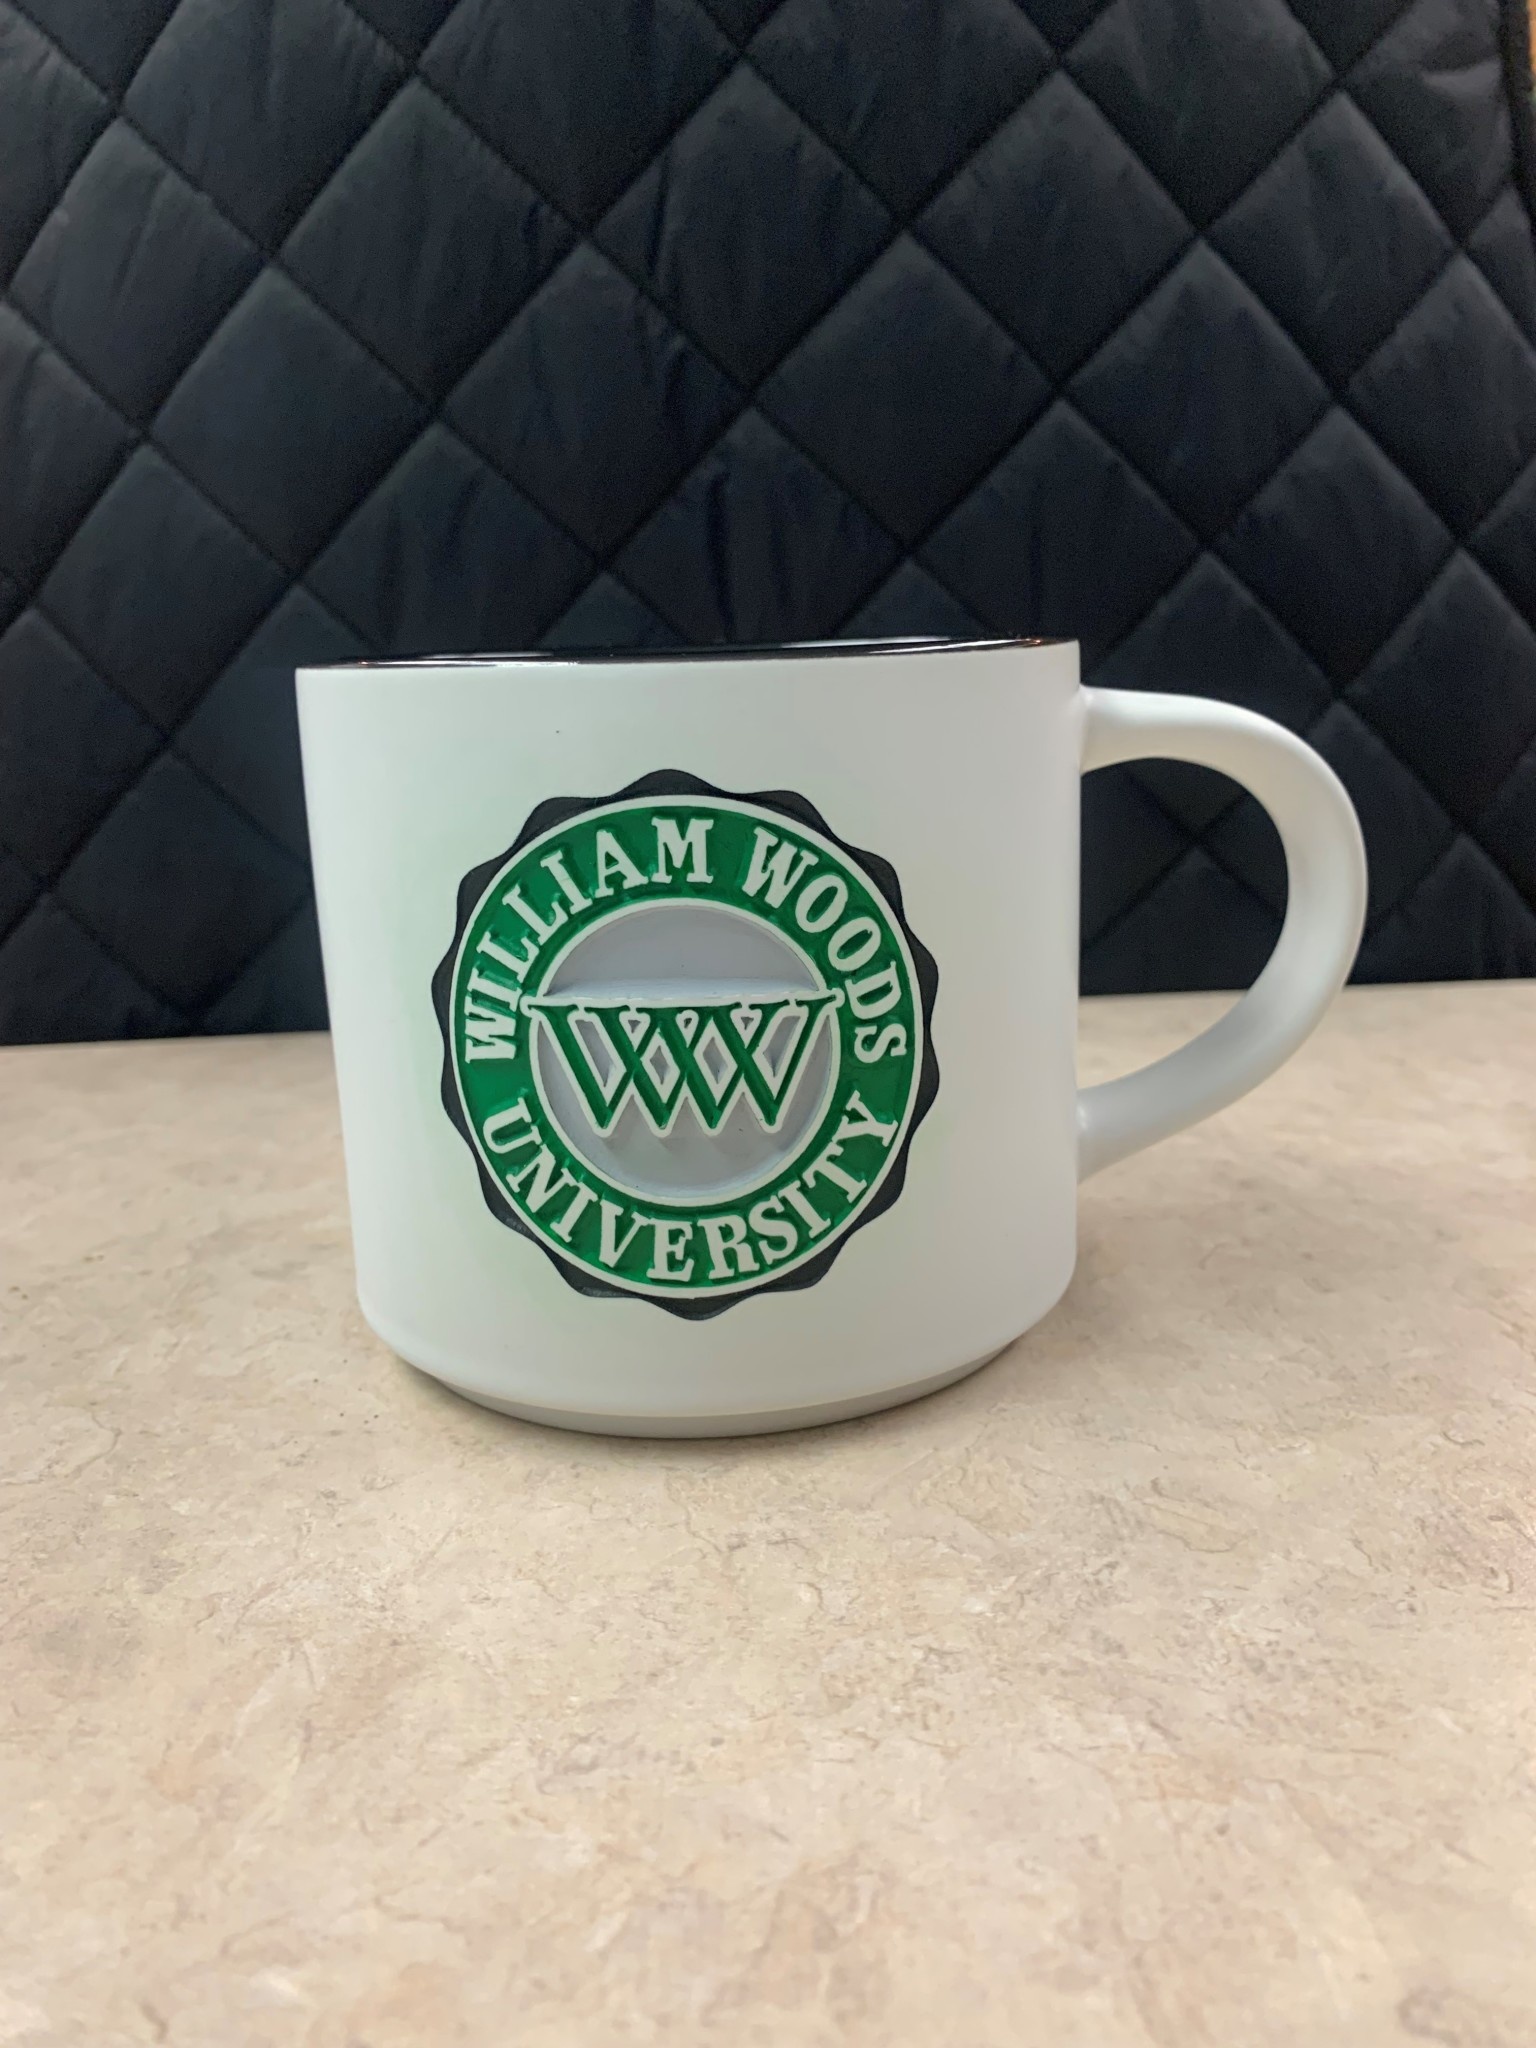 2023 WW William Woods University Seal mug - William Woods University